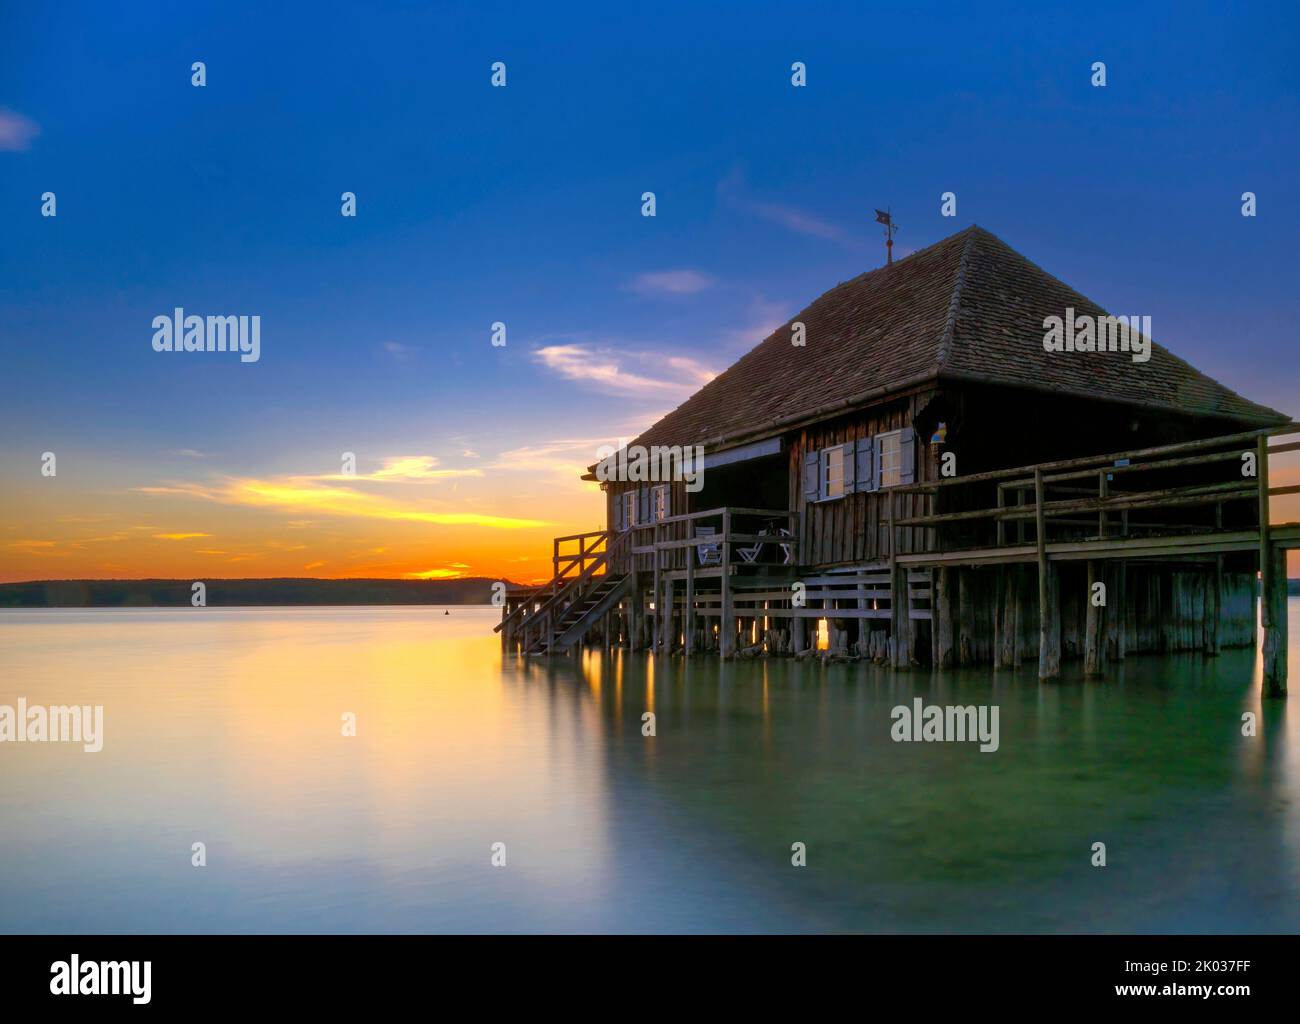 Boathouse at dusk, Buch am Ammersee, Fünfseenland, Upper Bavaria, Bavaria, Germany, Europe Stock Photo